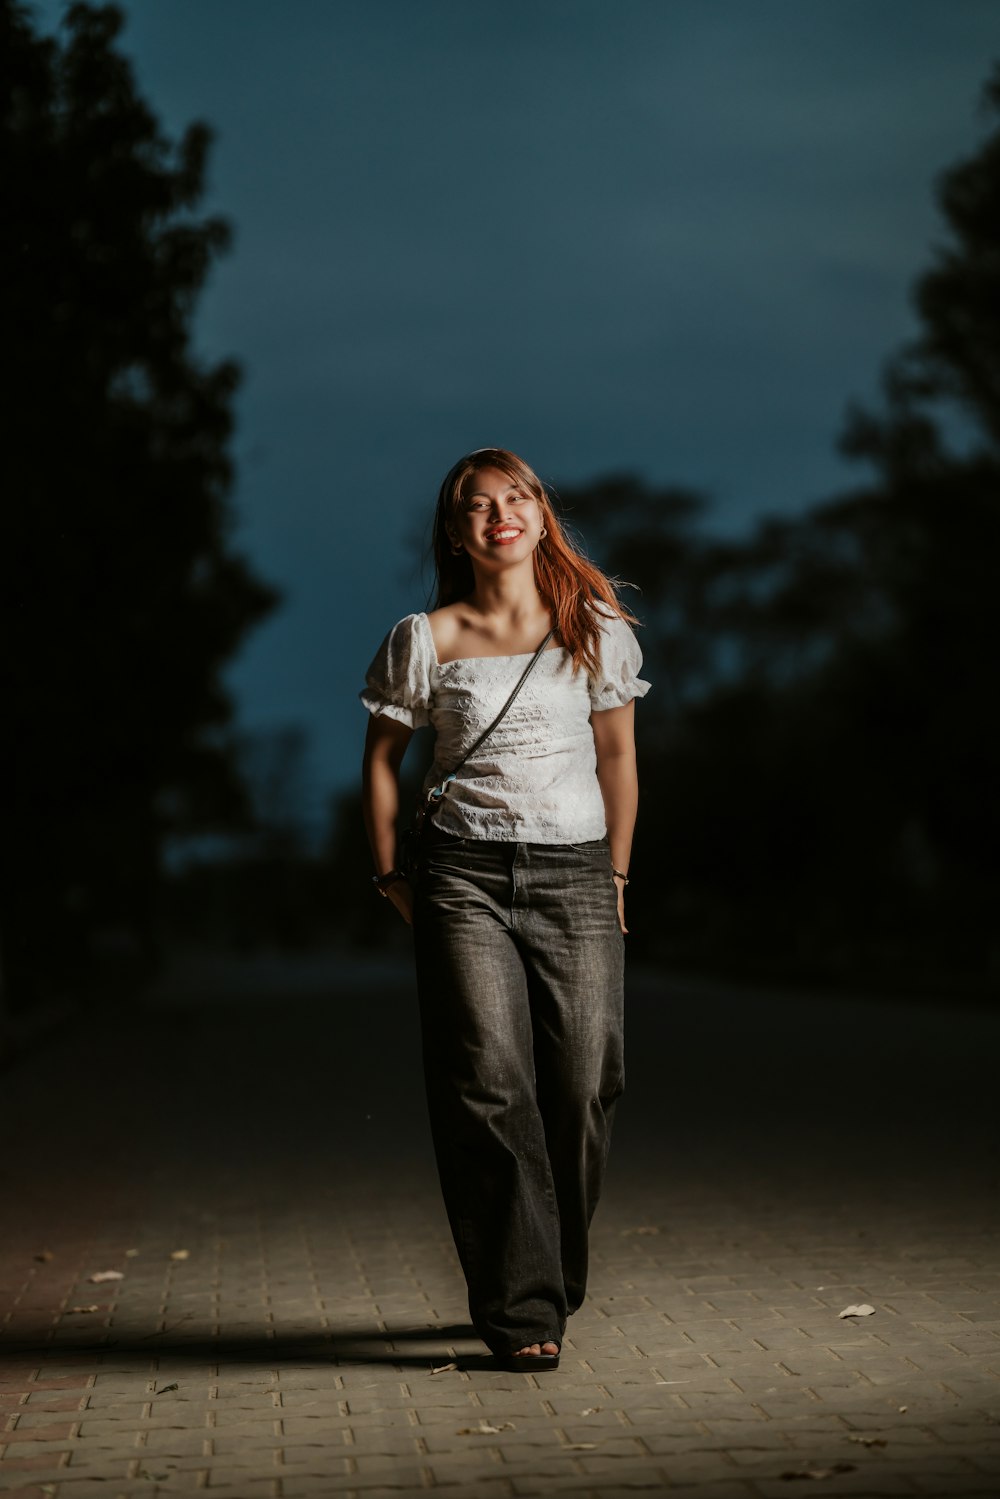 a woman walking down a sidewalk at night